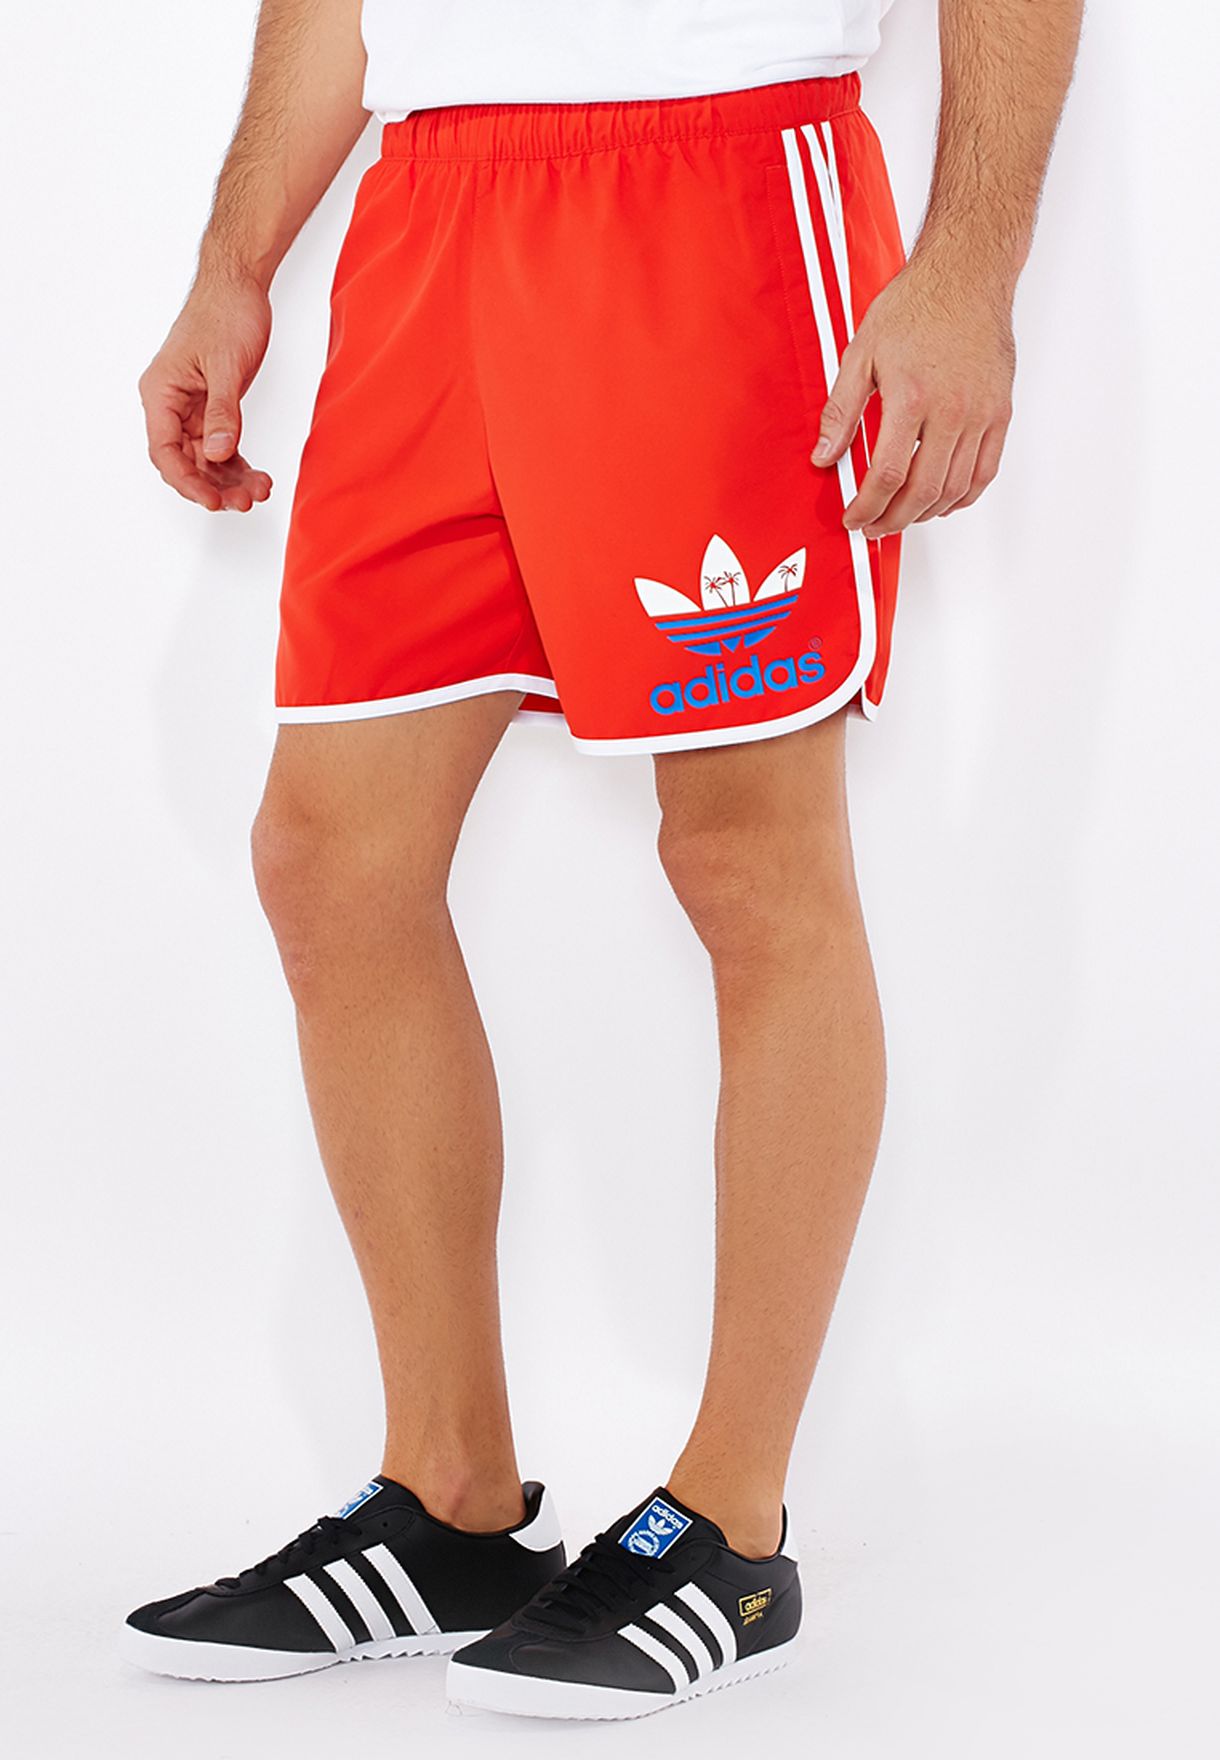 adidas island shorts